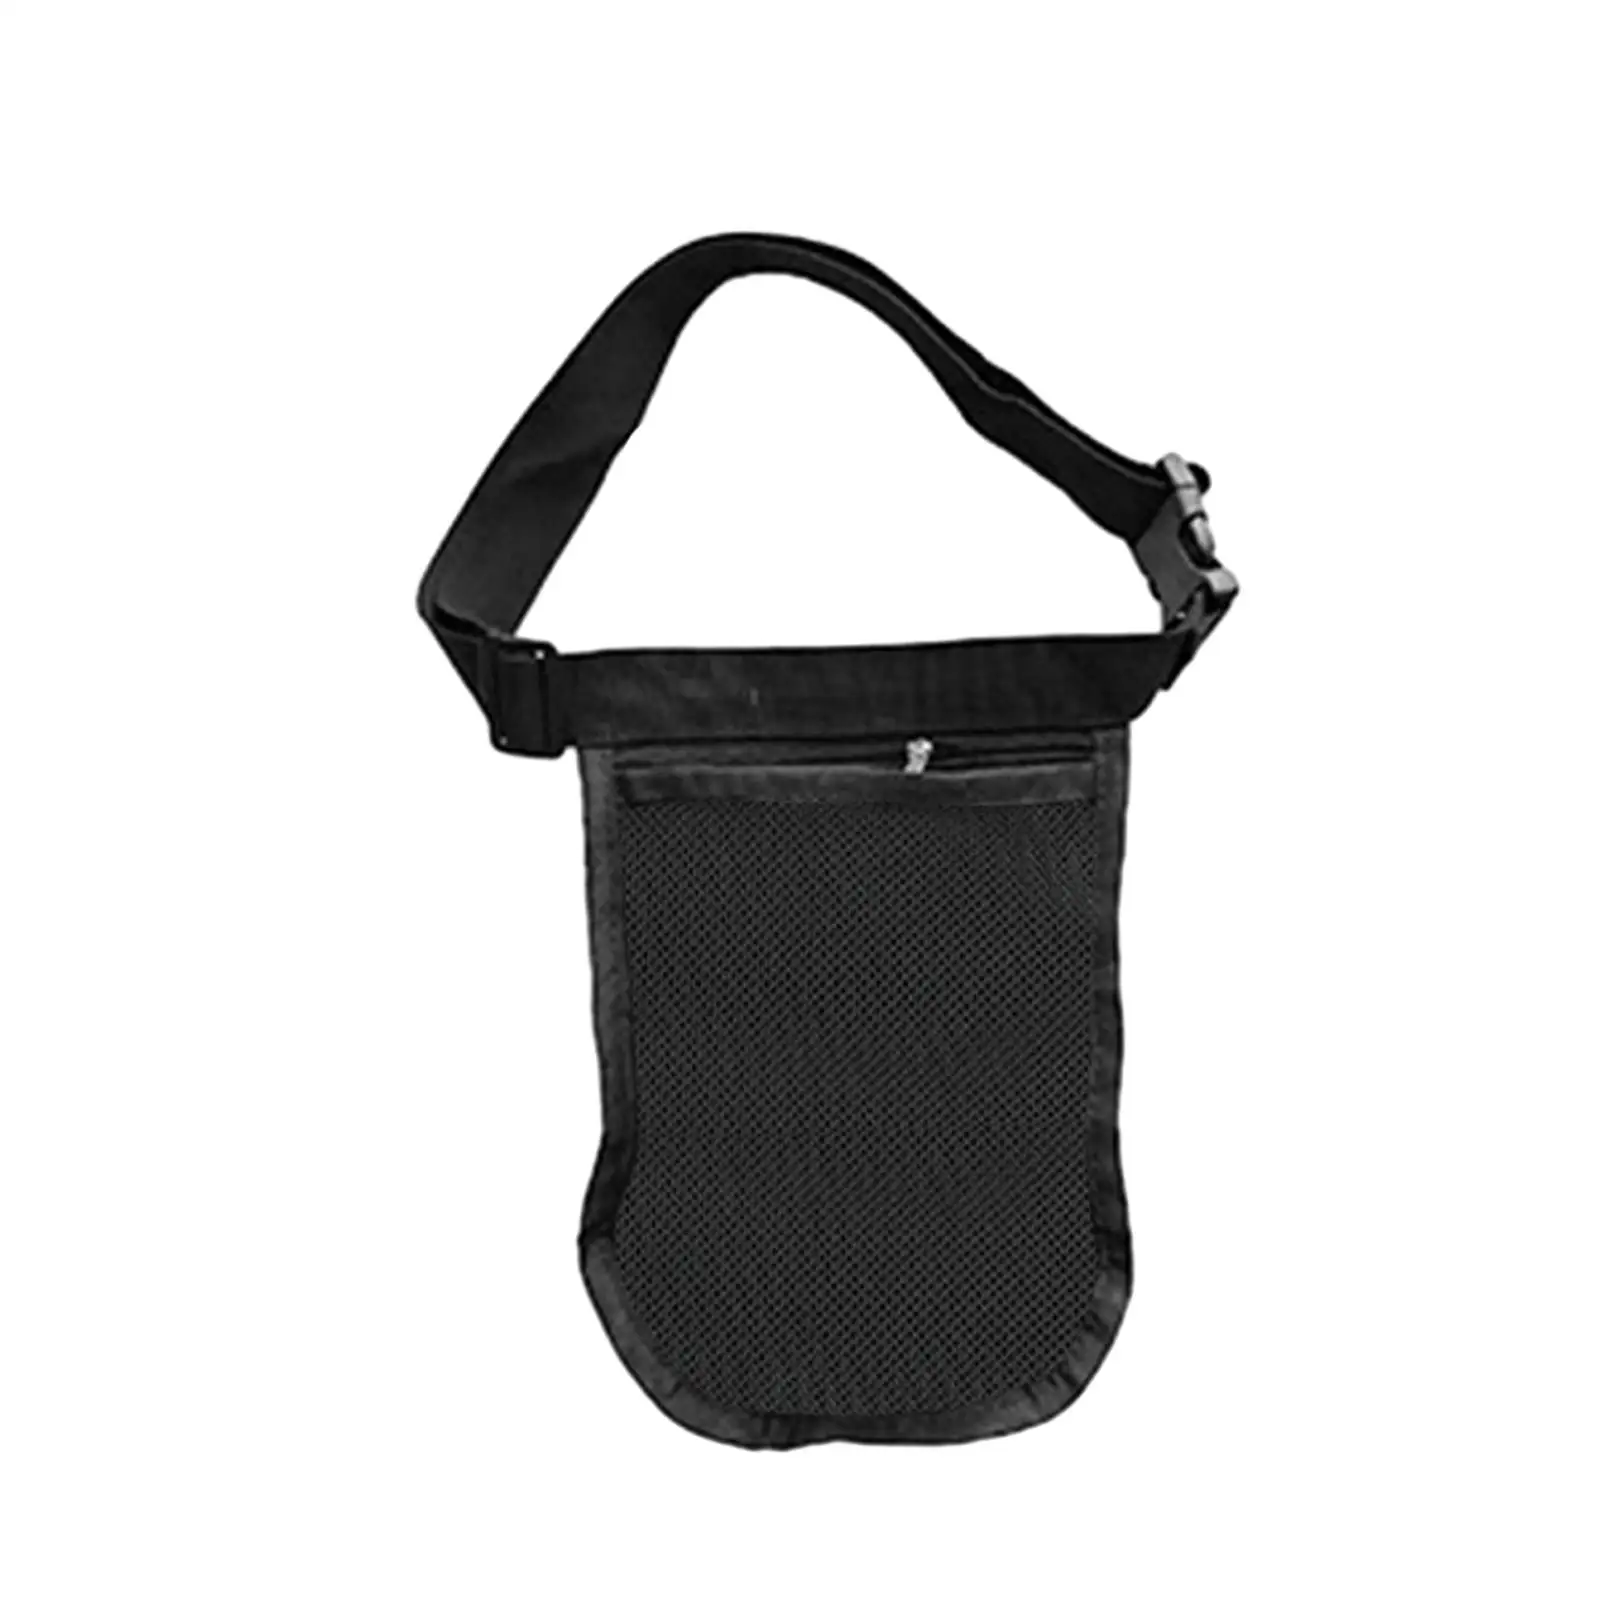 Black Tennis Ball Holder Tennis Pickleball Accessory Carrier Gadgets Tennis Ball Storage Bag for Storing Balls and Phones